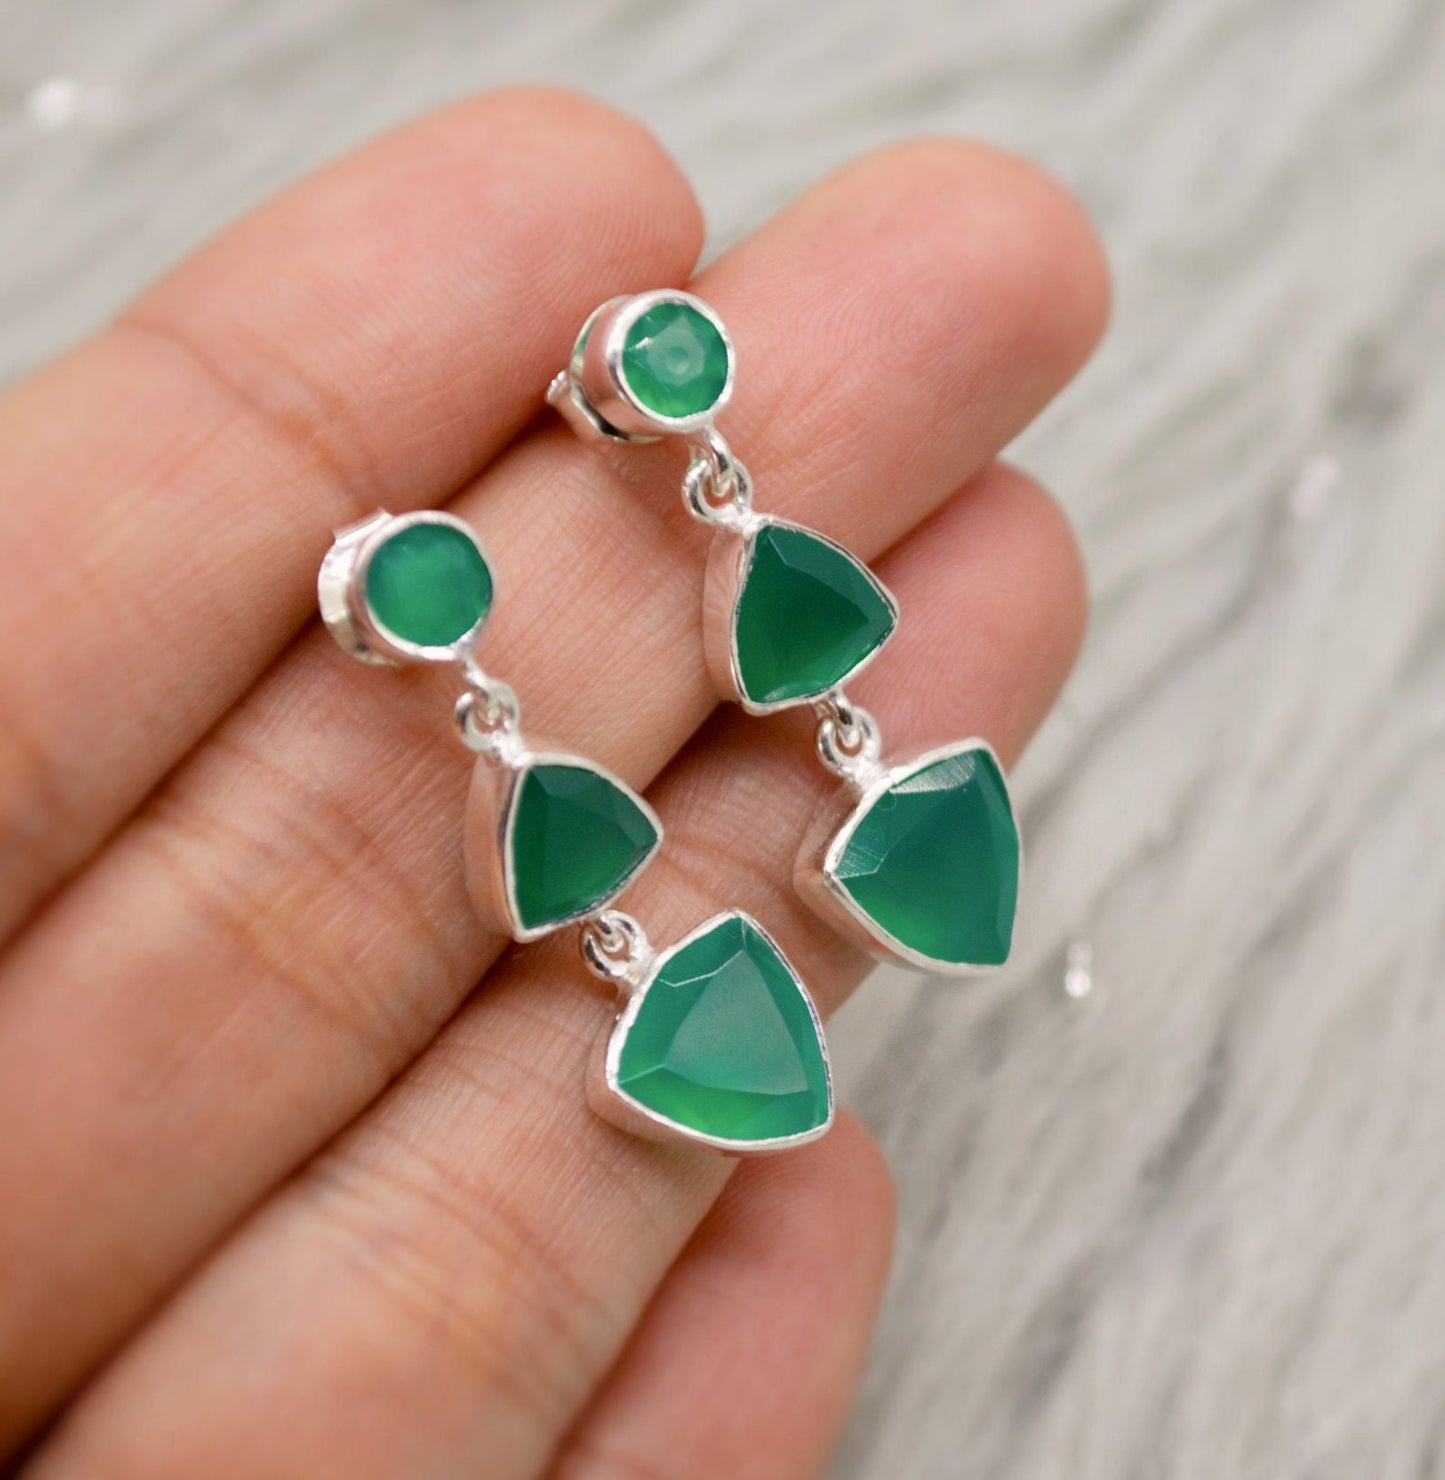 Green Onyx Sterling Silver Earrings, Statement Dangle Drops, Green Onyx Jewelry, Gemstone Earrings, Gifts For Her